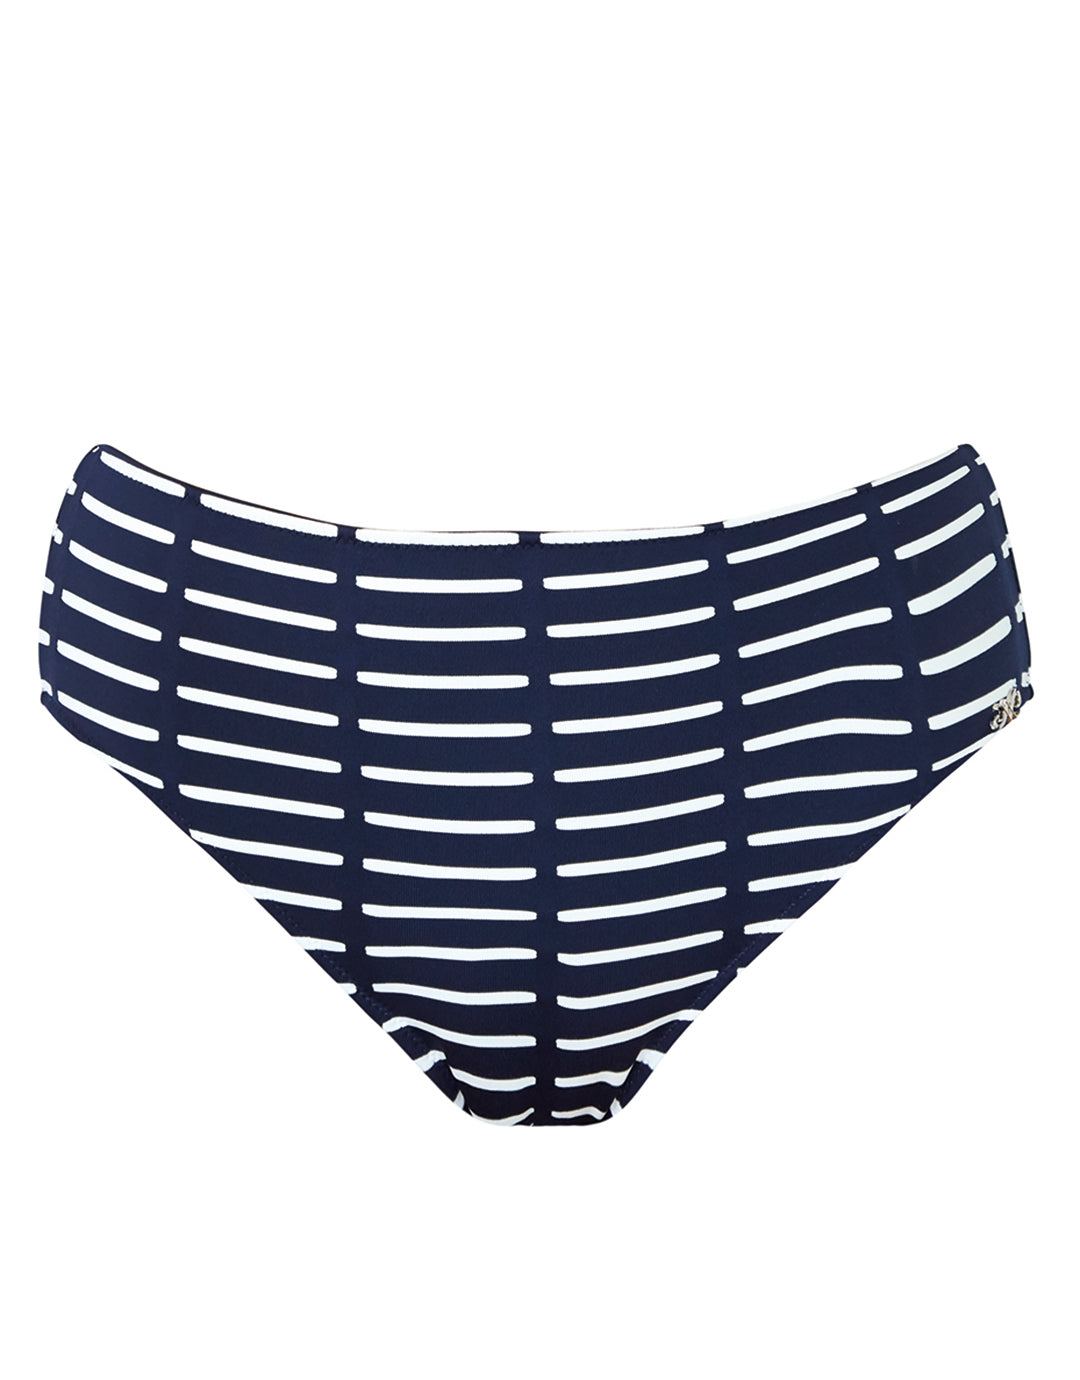 Nuria Ferrer Capri Bikini Pant - Navy Stripe